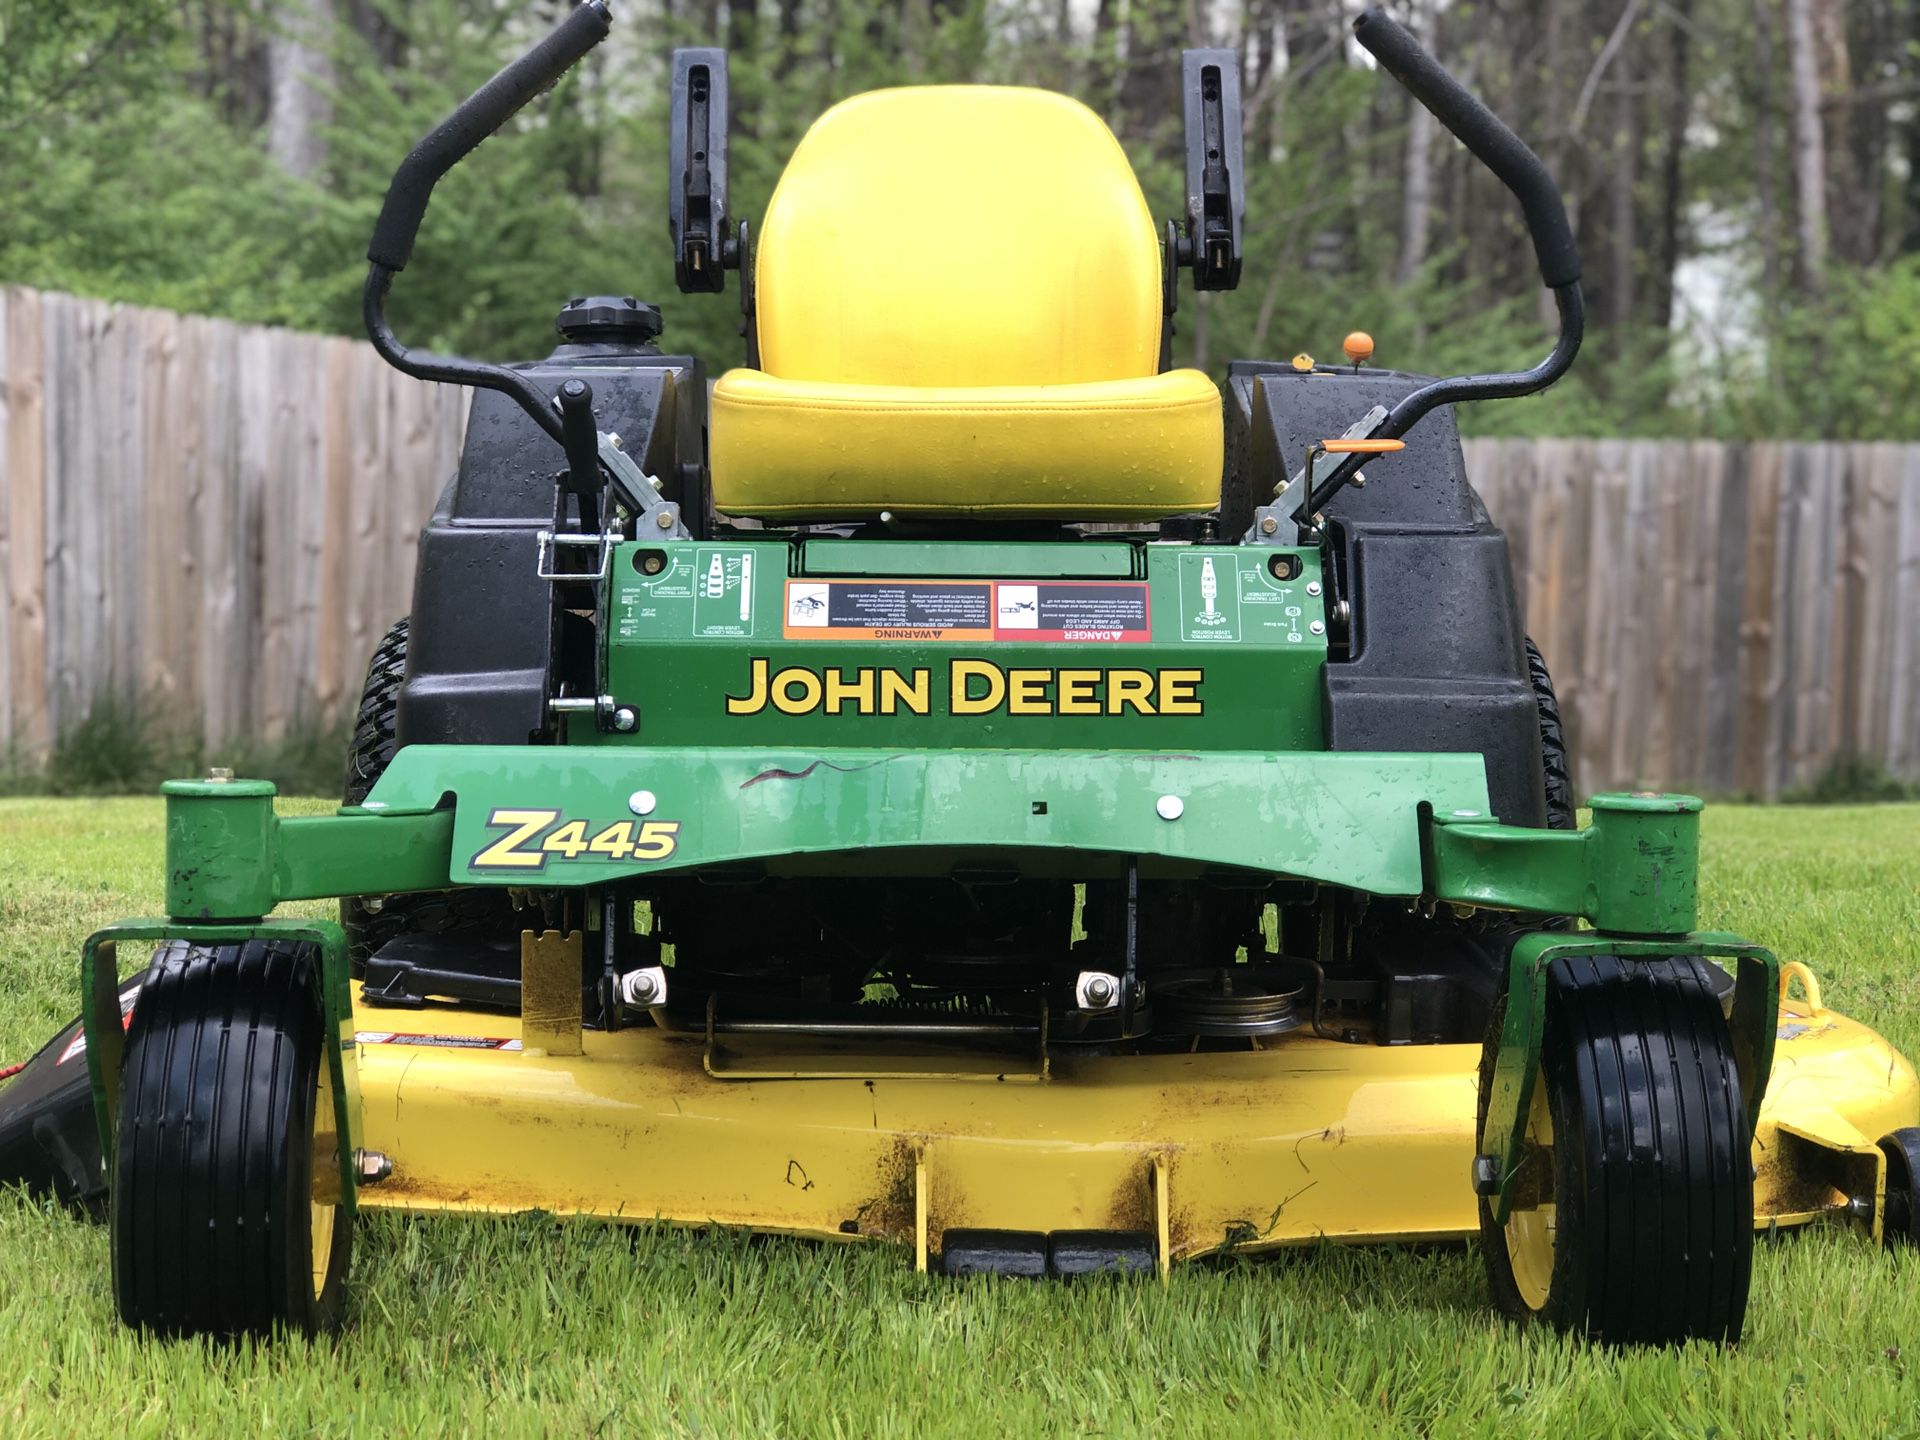 John Deere zero Turn mower. 54” deck.